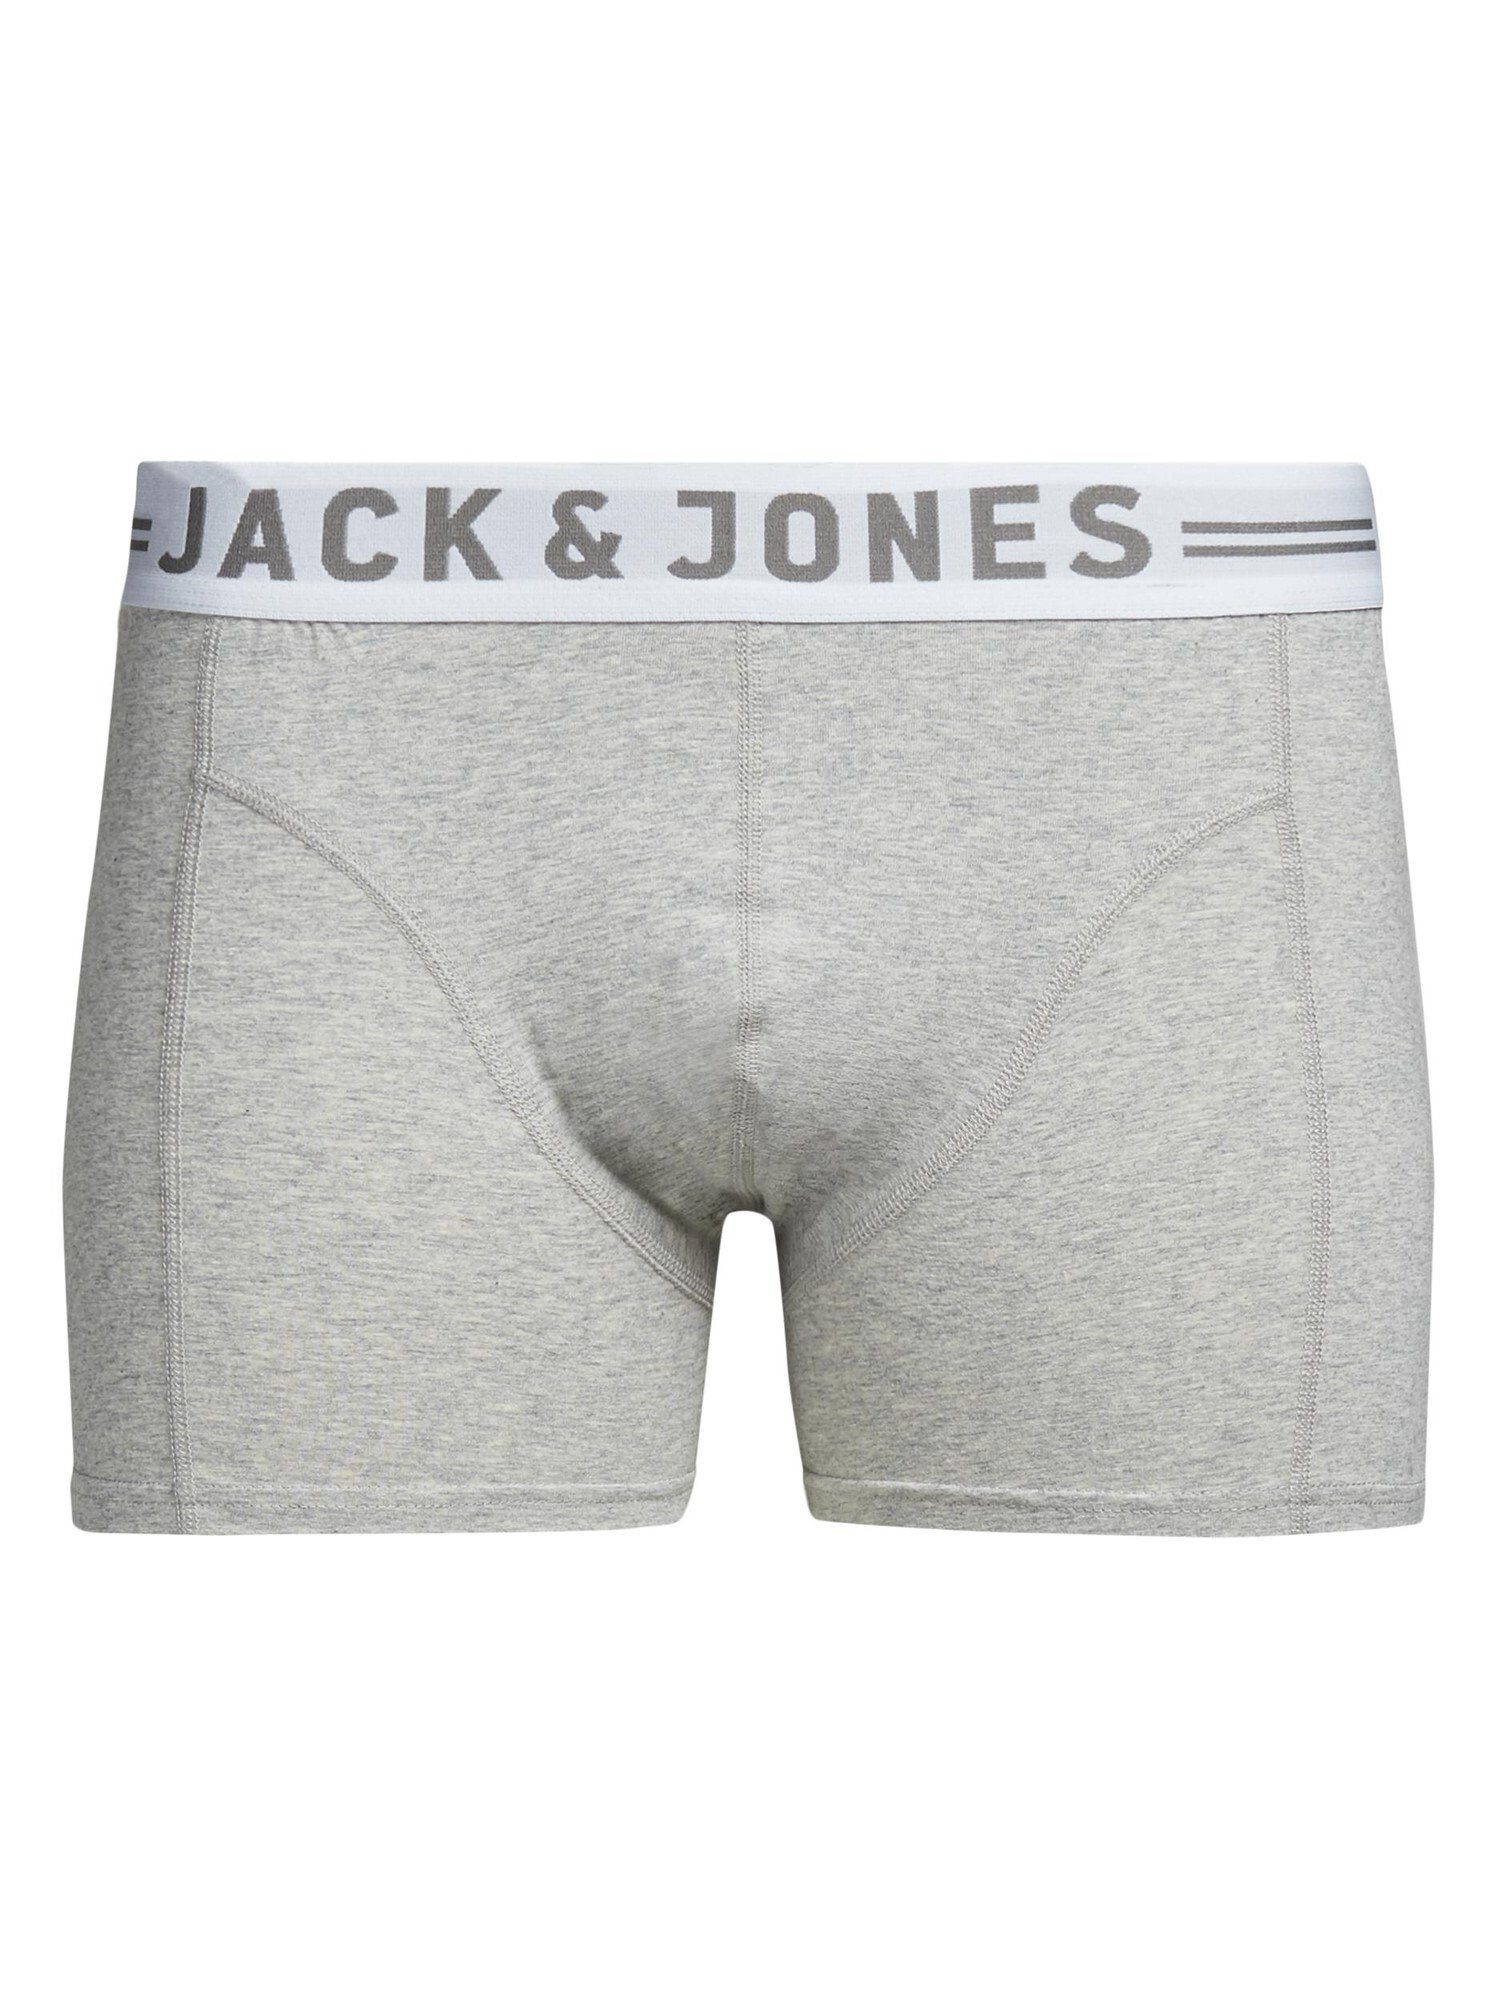 Jack & Jones Boxershorts Trunks Sense Unterhose hellgrau